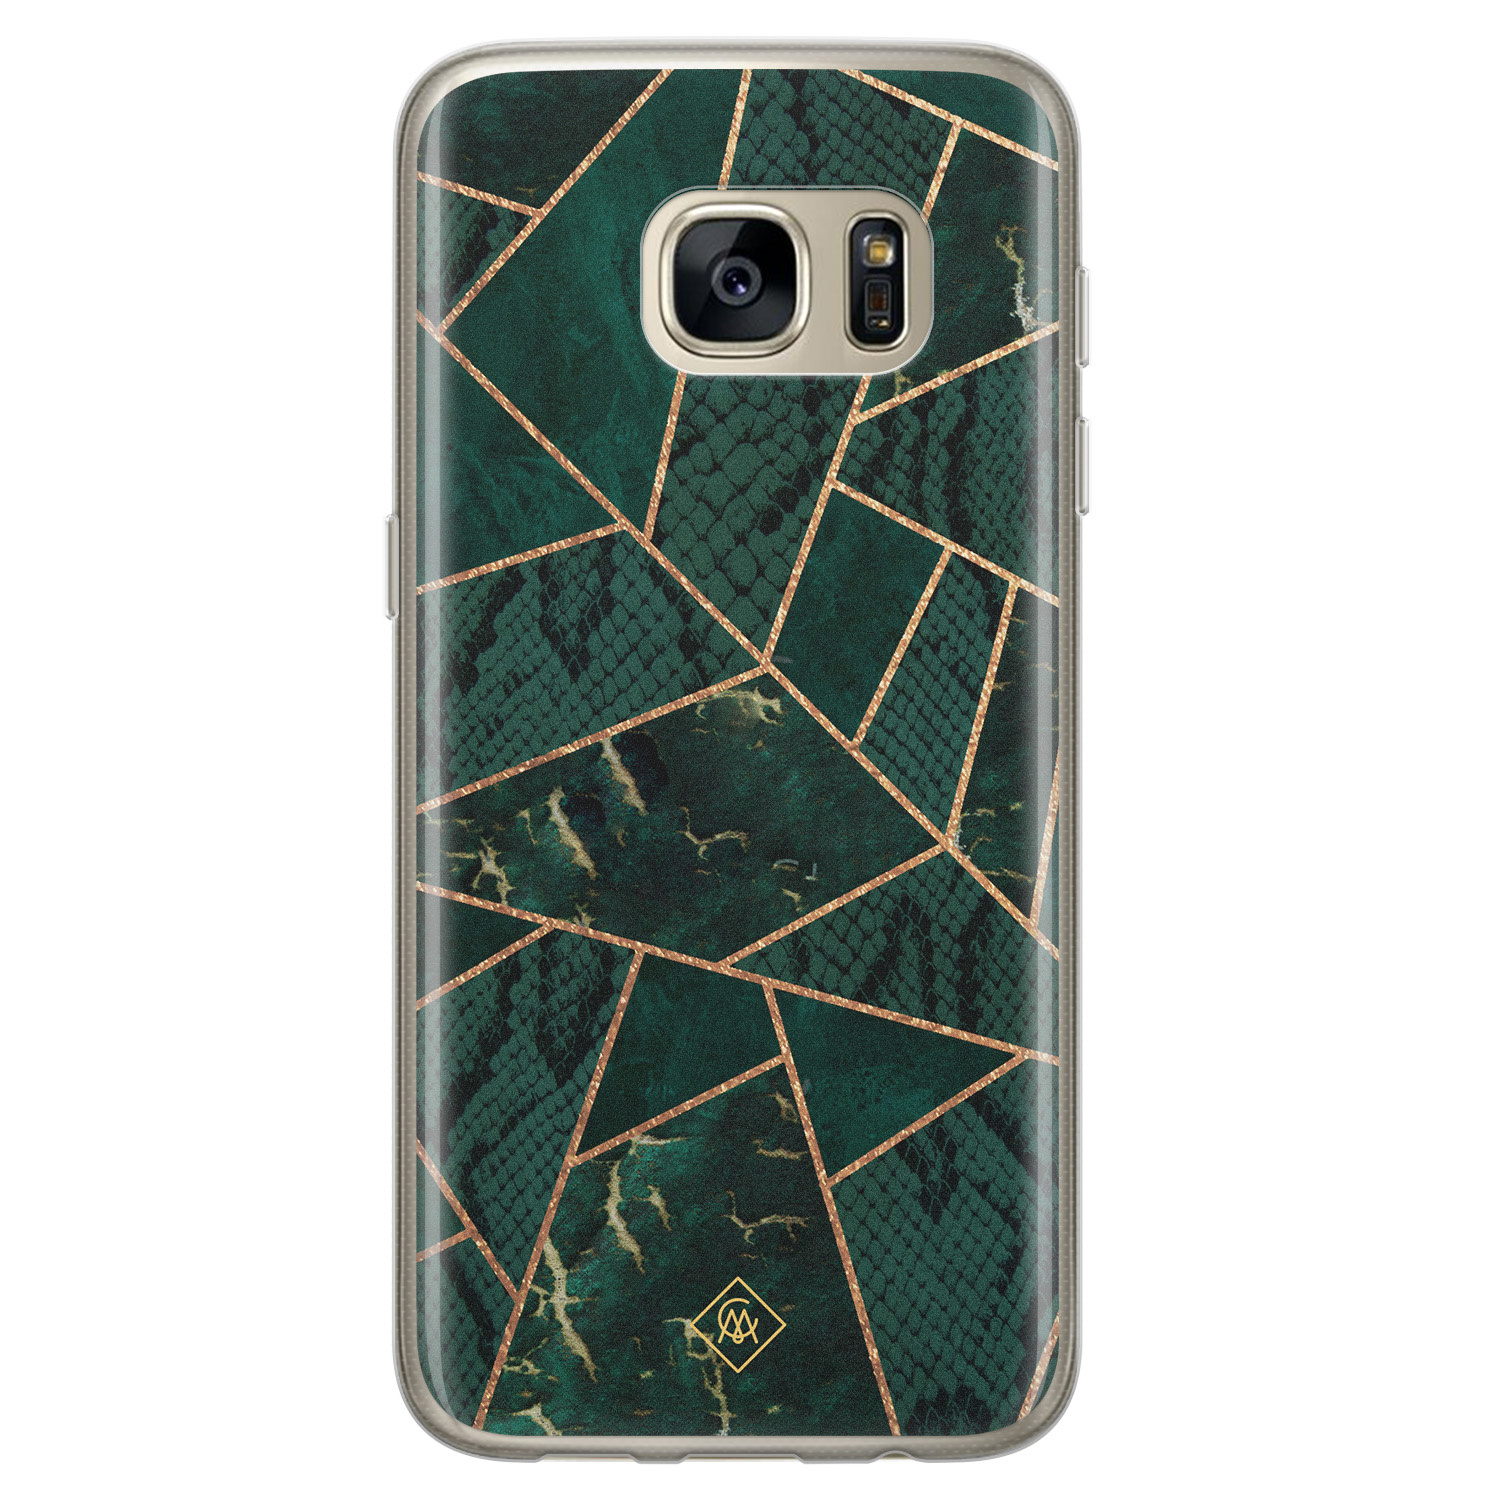 Spectaculair Classificeren Absoluut Samsung Galaxy S7 siliconen hoesje - Abstract groen - Casimoda.nl